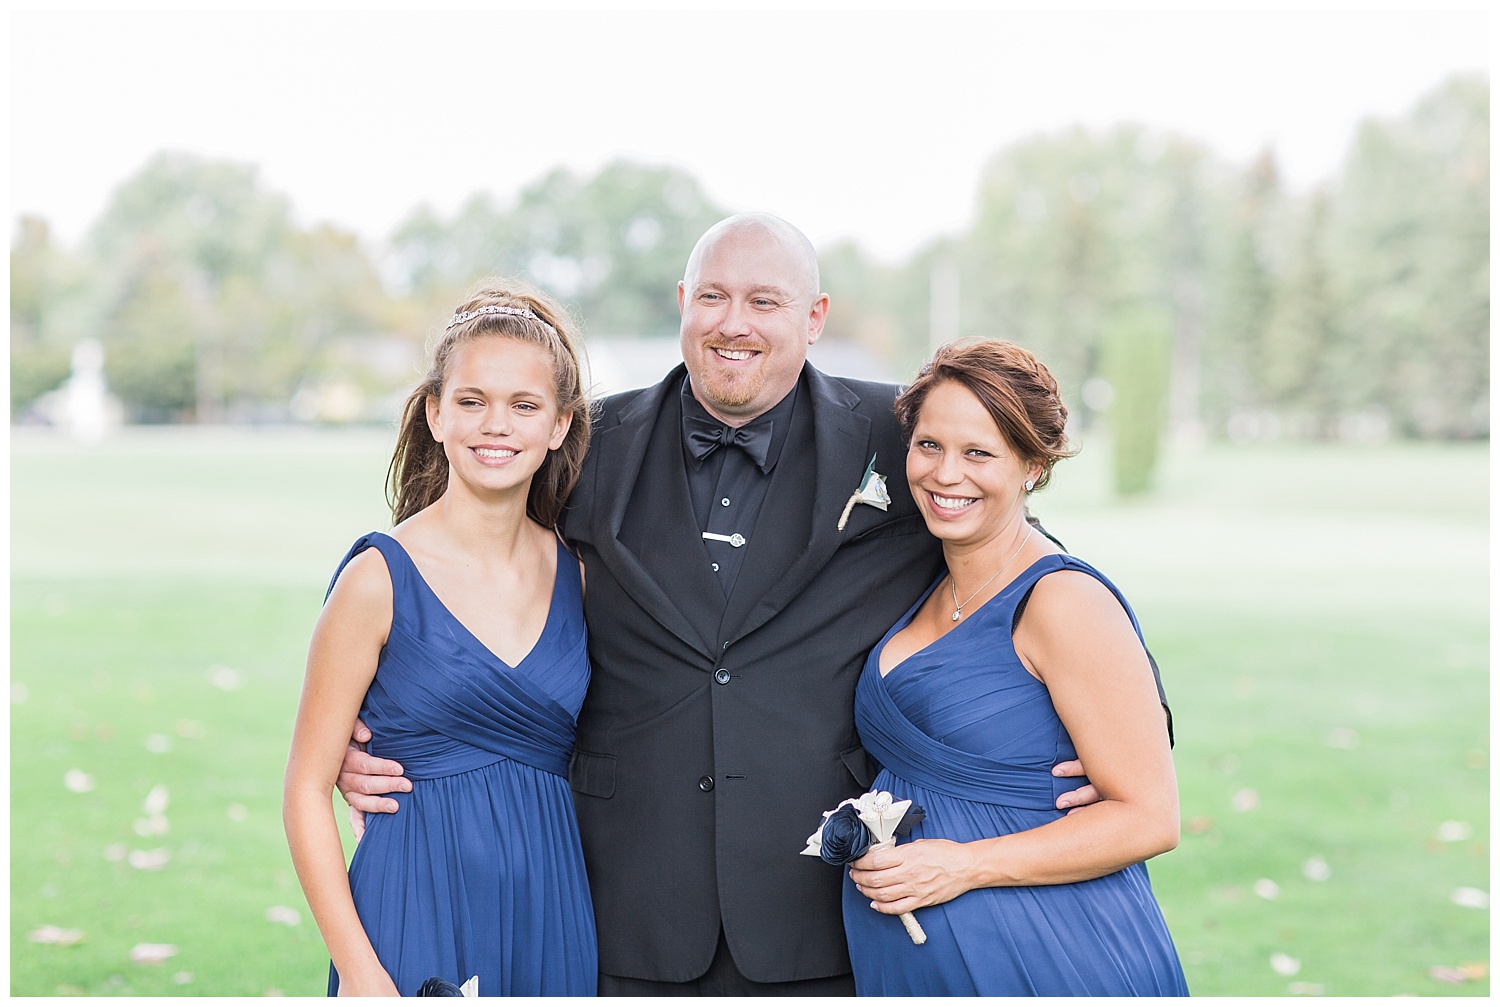 Jessica and Scott McKay - Terry Hills Golf Course - Batavia NY - Lass and Beau-161_Buffalo wedding photography.jpg